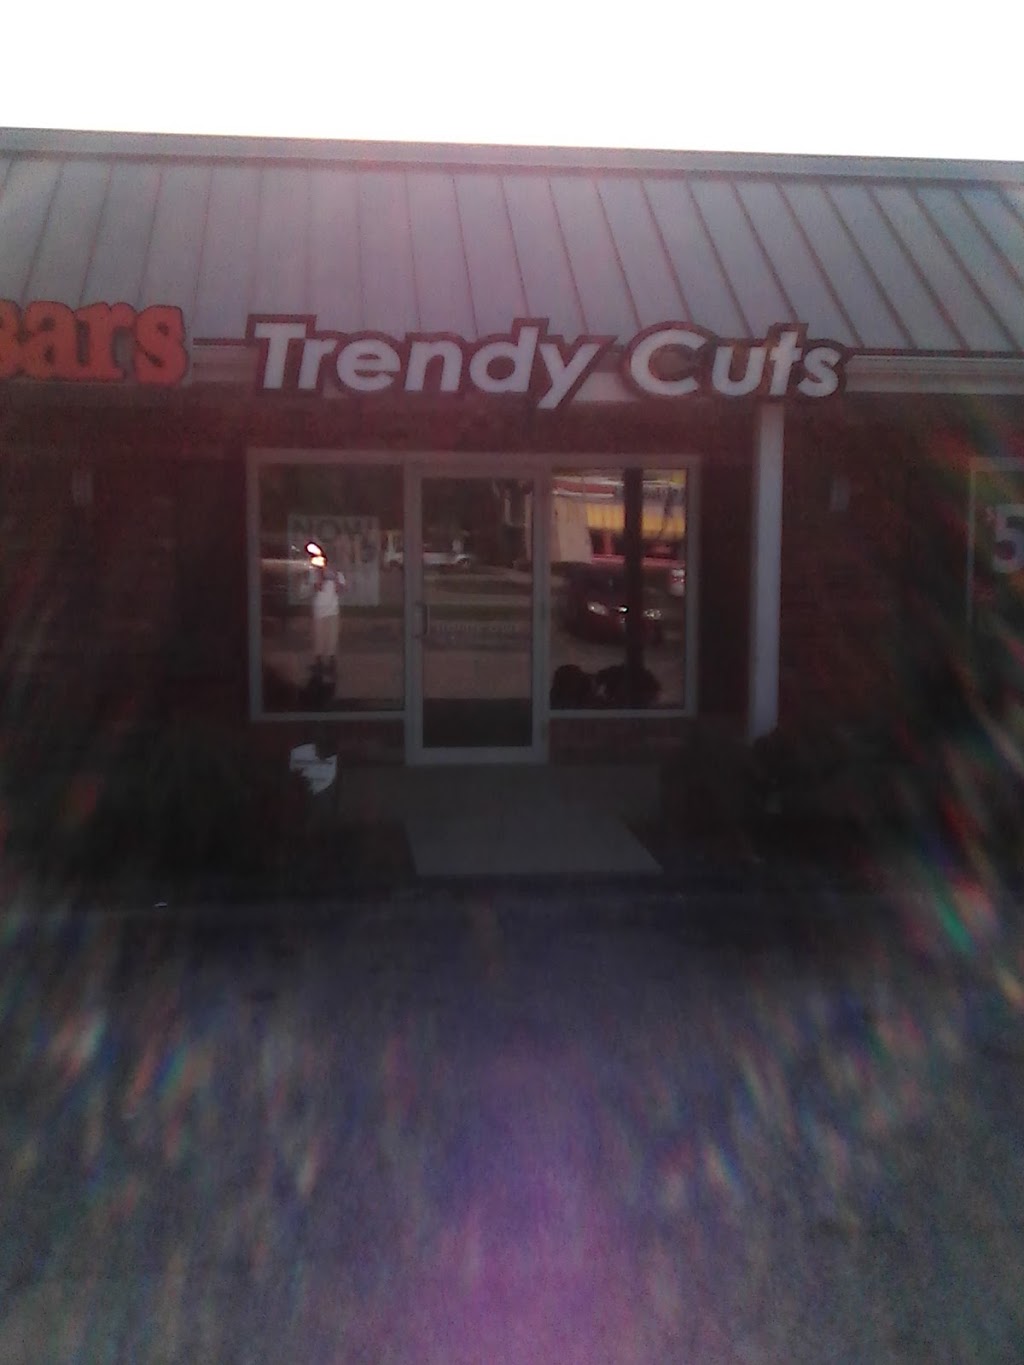 Trendy Cuts | 468 Richmond Rd, Richmond Heights, OH 44143 | Phone: (216) 586-4838